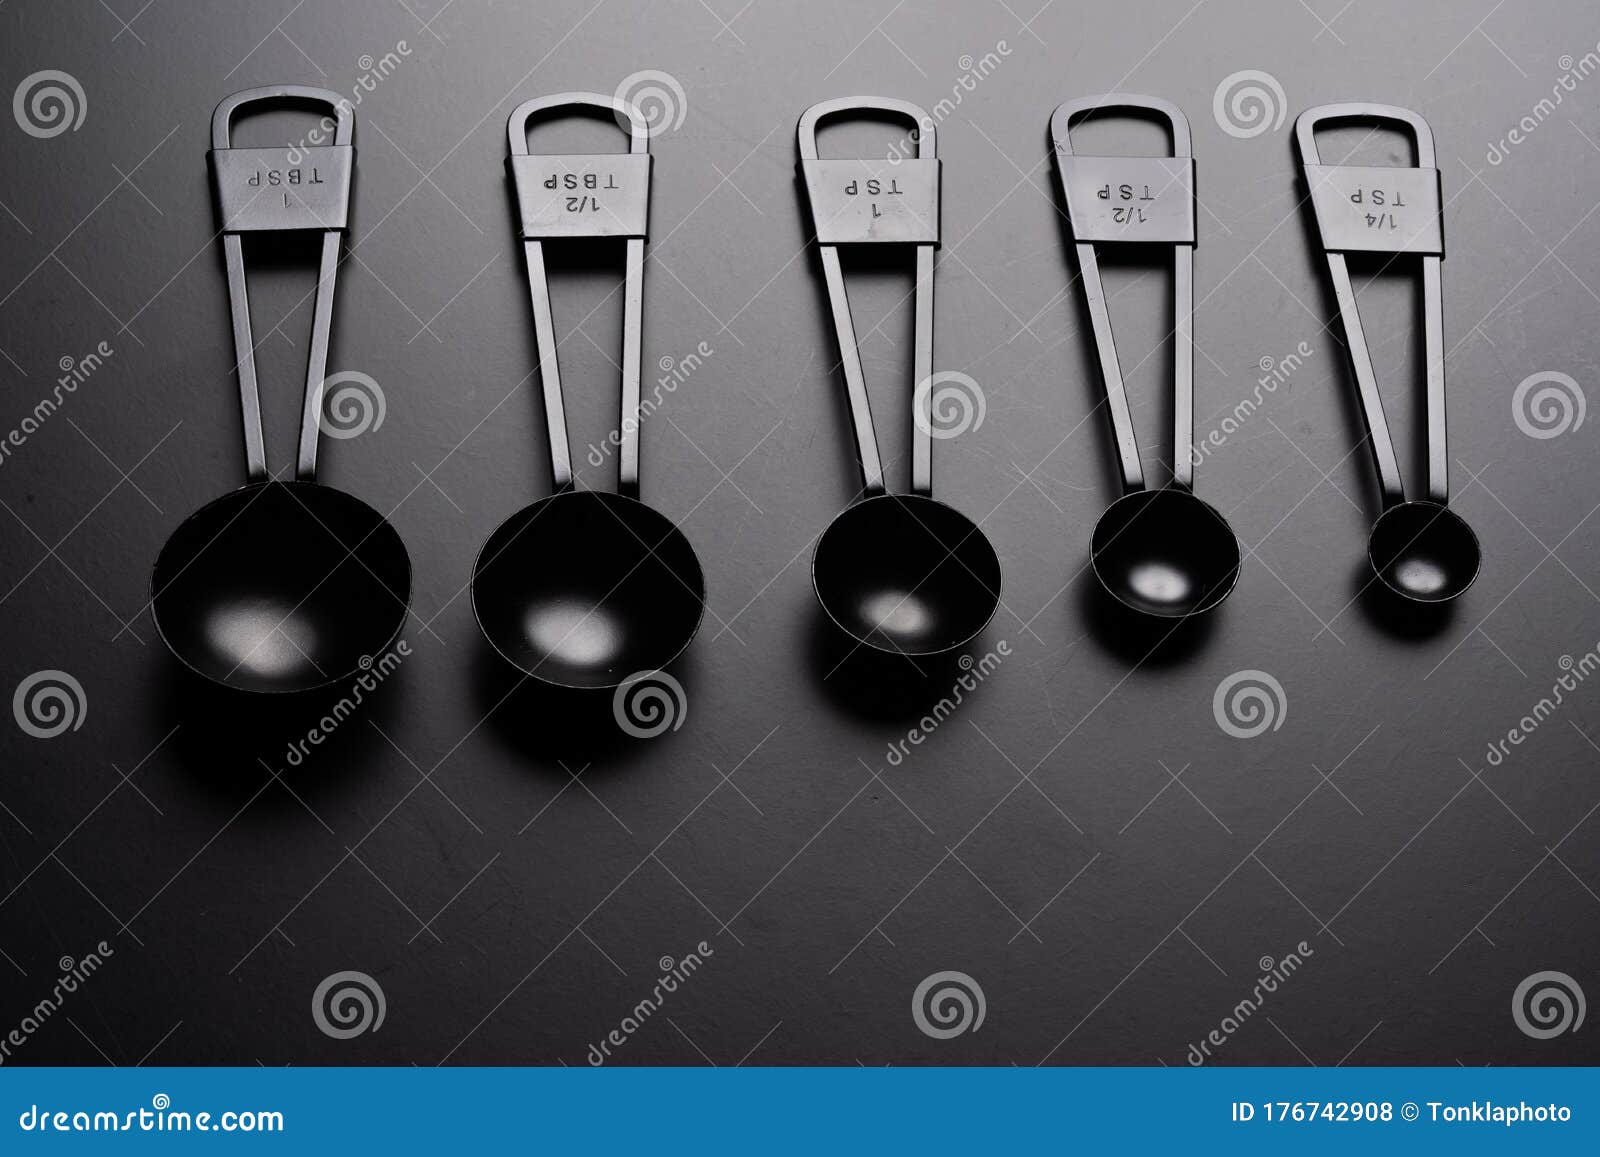 https://thumbs.dreamstime.com/z/set-black-measuring-spoon-background-176742908.jpg